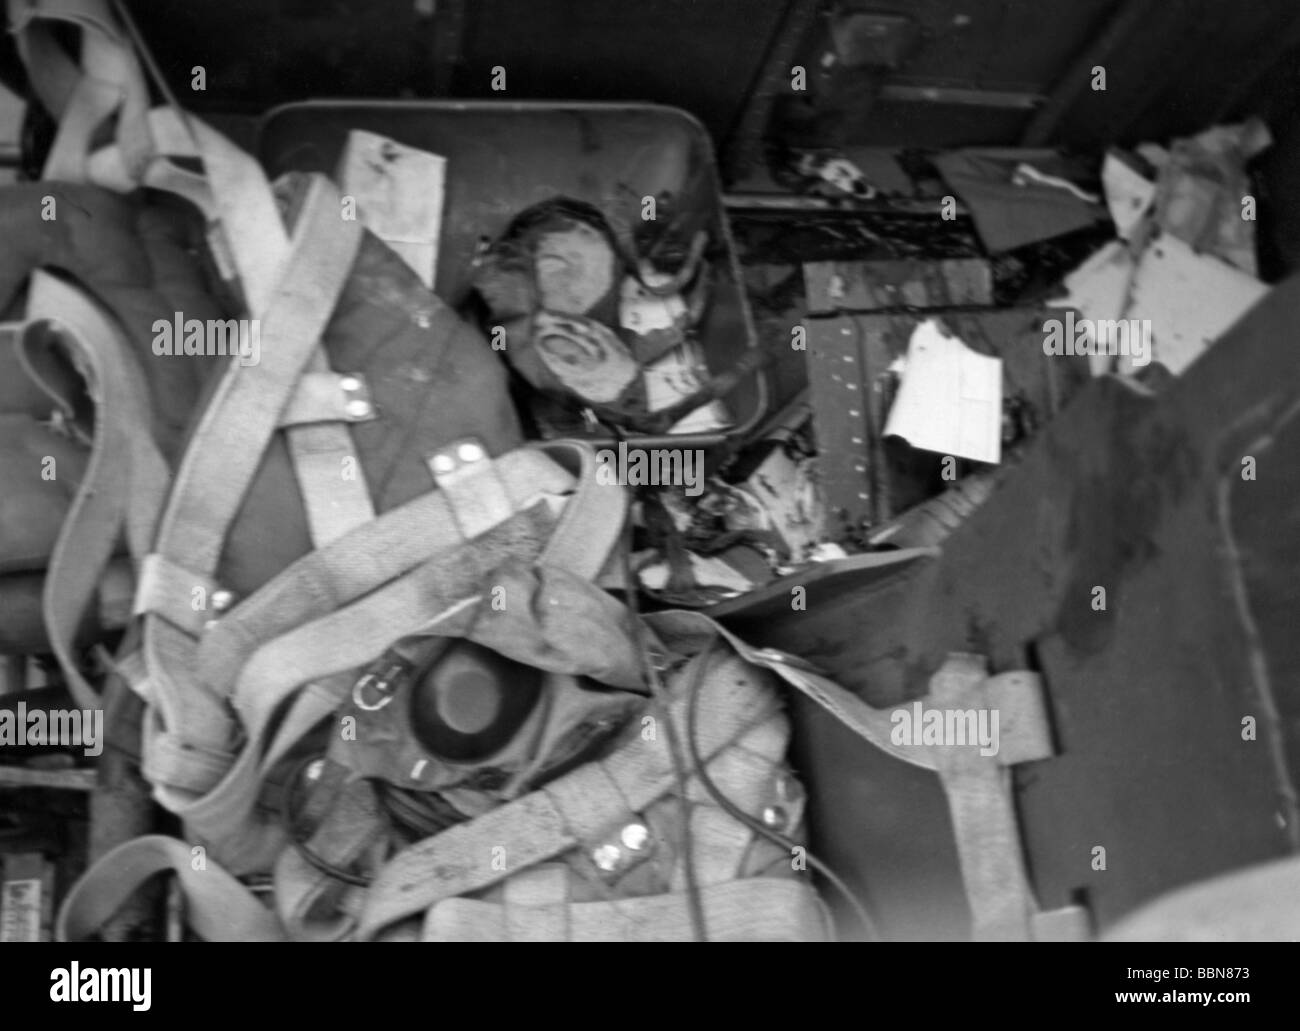 events, Second World War / WWII, aerial warfare, aircraft, damaged cockpit of a German close reconnaissance aircraft Focke-Wulf 189 'Uhu', Soviet Union, 16.7.1941, Stock Photo